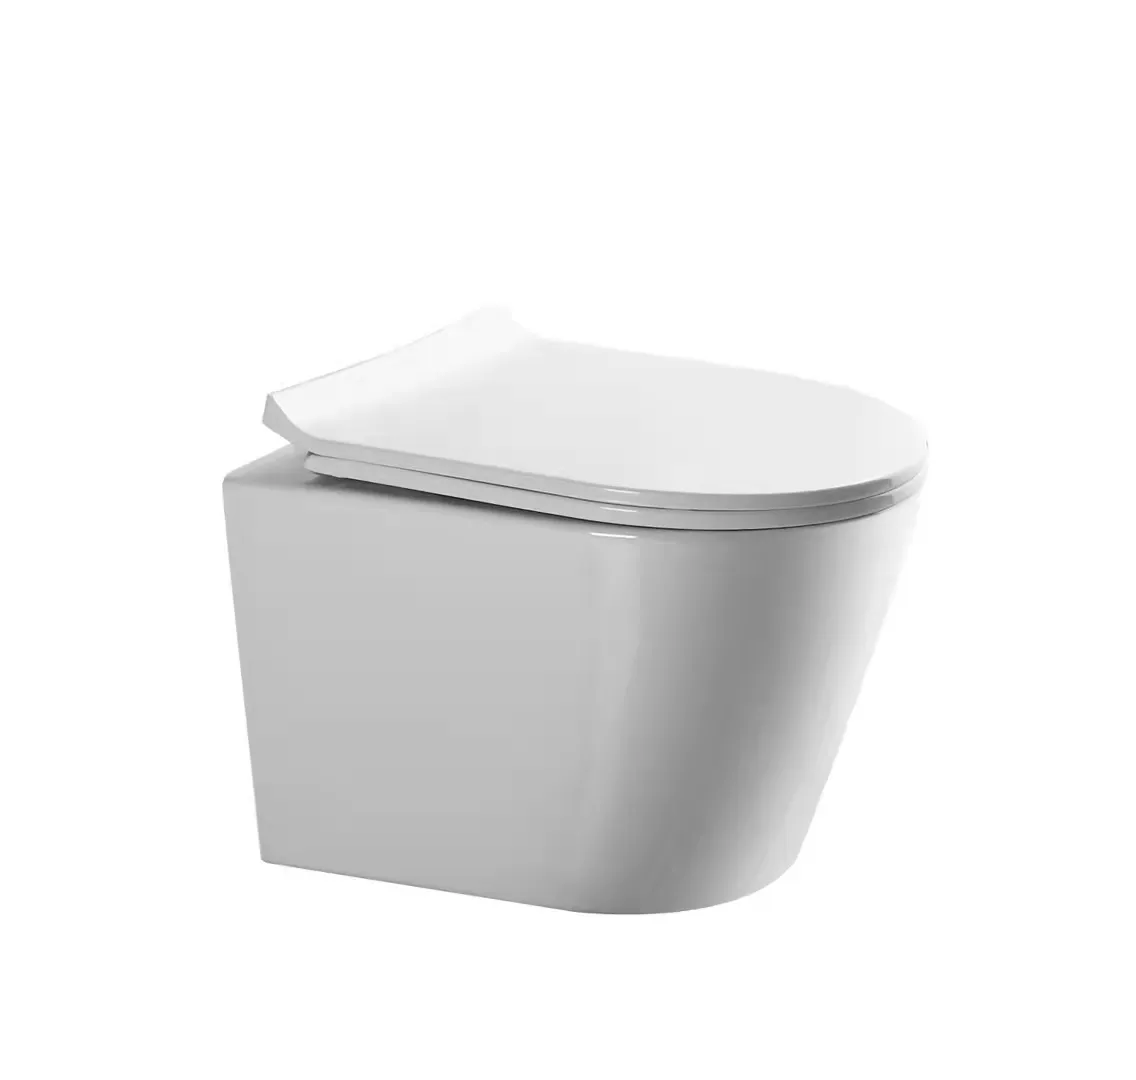 Luxury instock wall mounted toilet with wallmount wc drain toilet bowl matt white bathroom wall hung pan toilet hanger